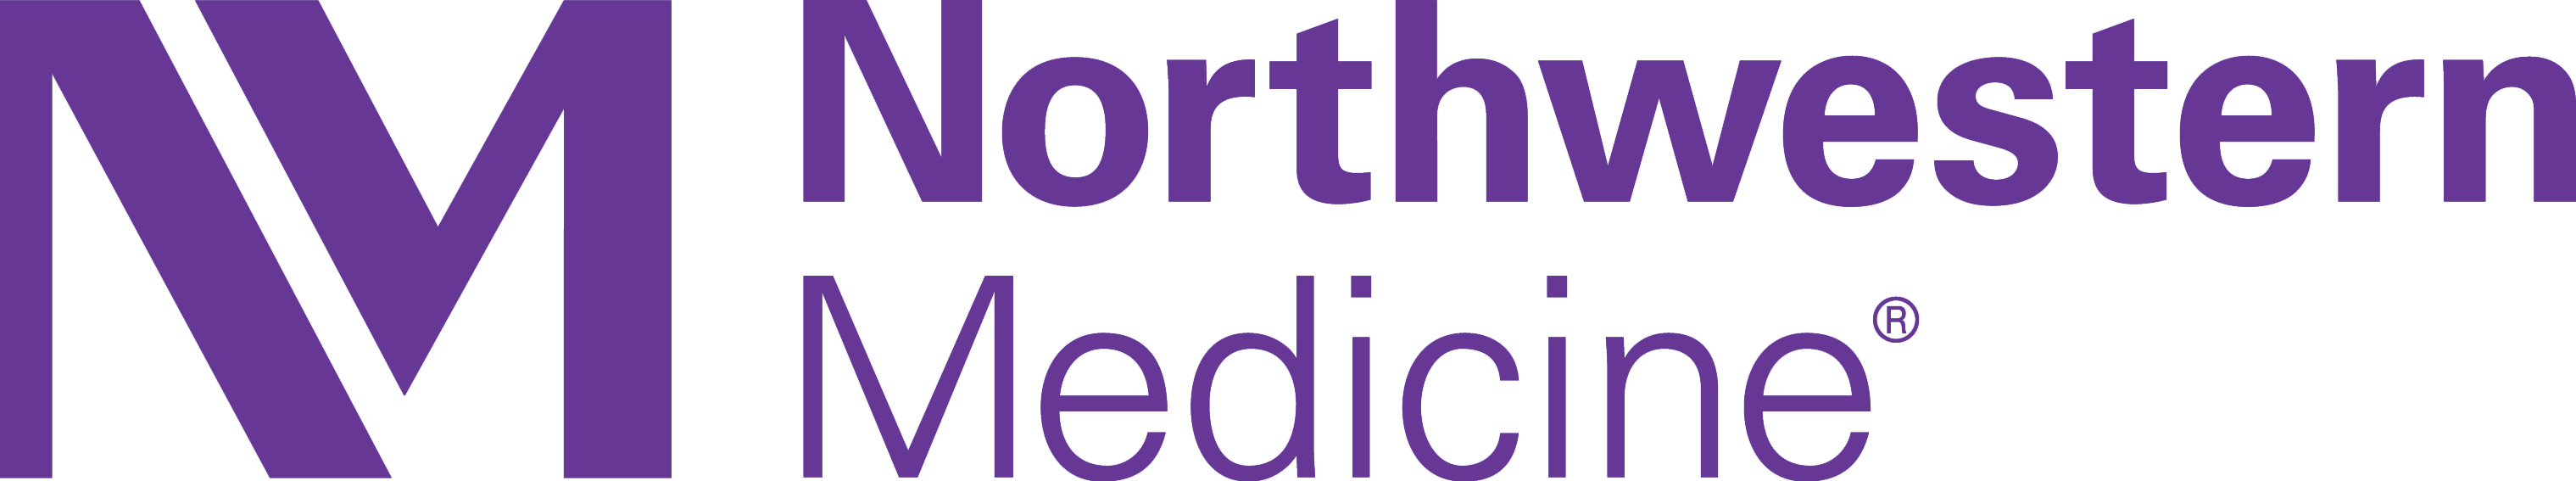 Northwestern Logo.png